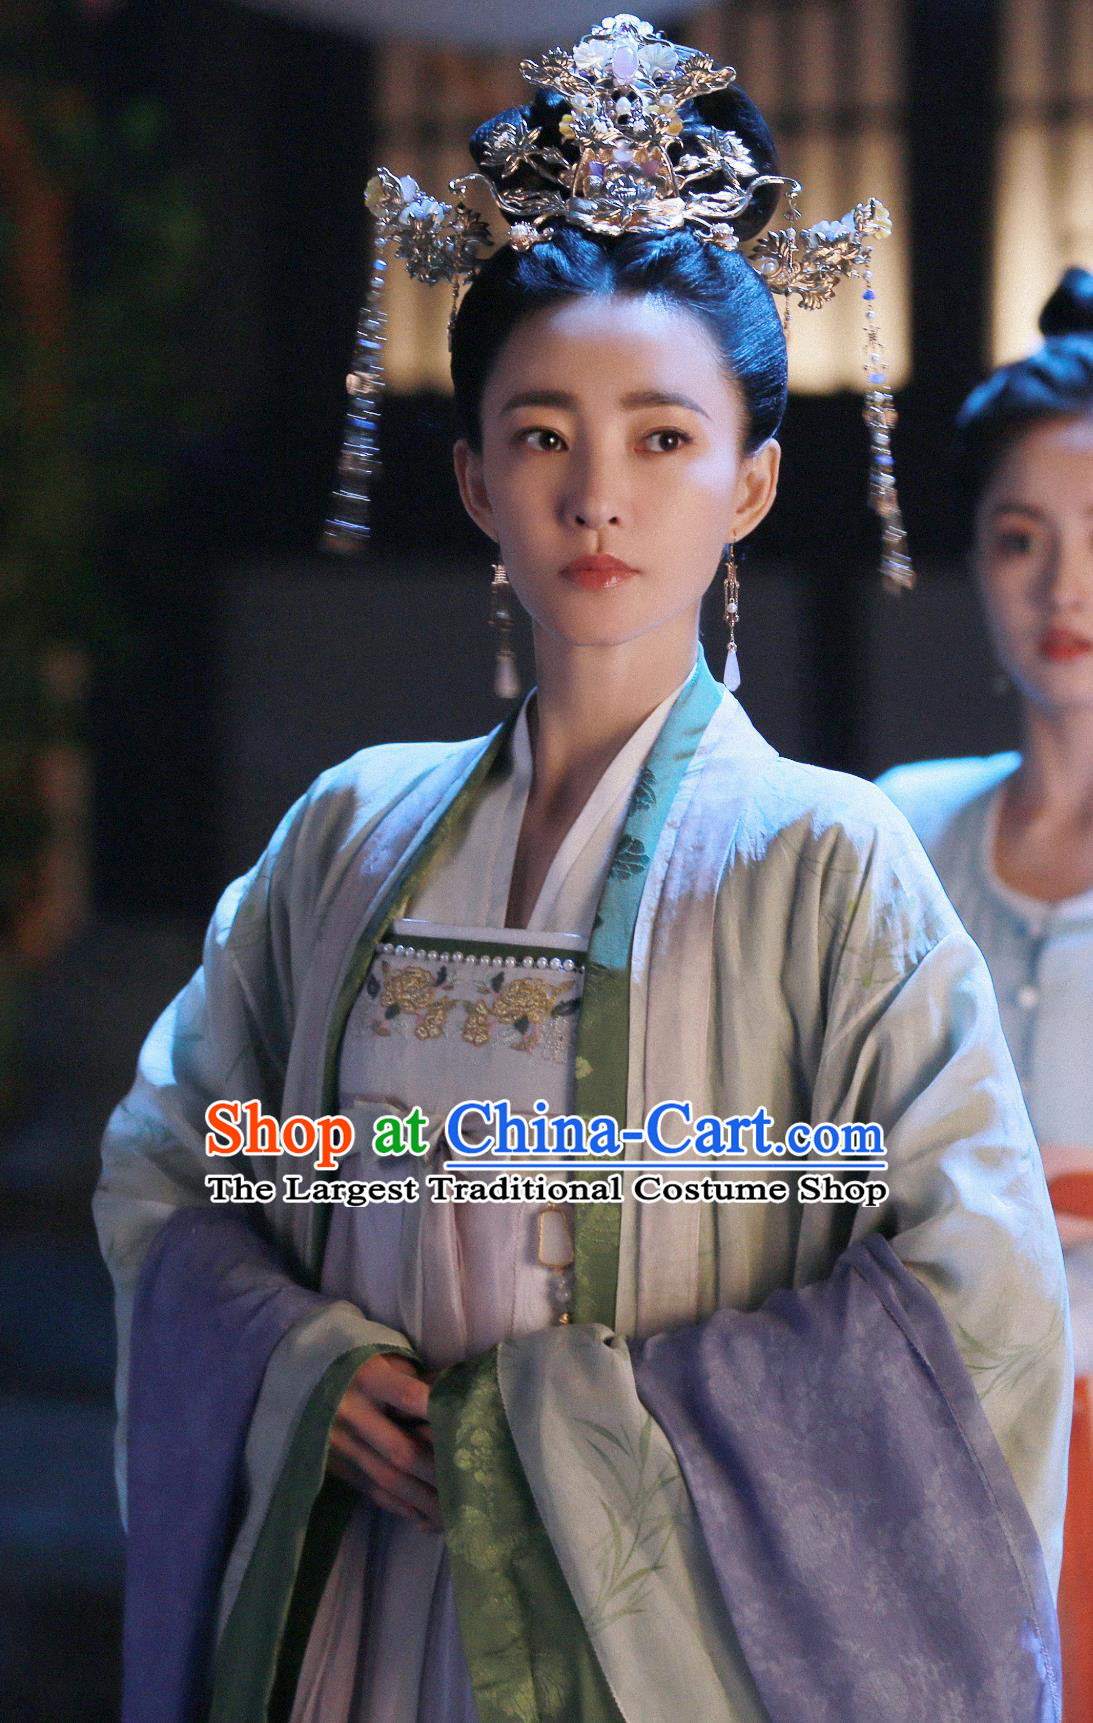 China Ancient Royal Queen Garment Costumes TV Drama The Legend of Zhuohua Princess Rou Jia Dresses